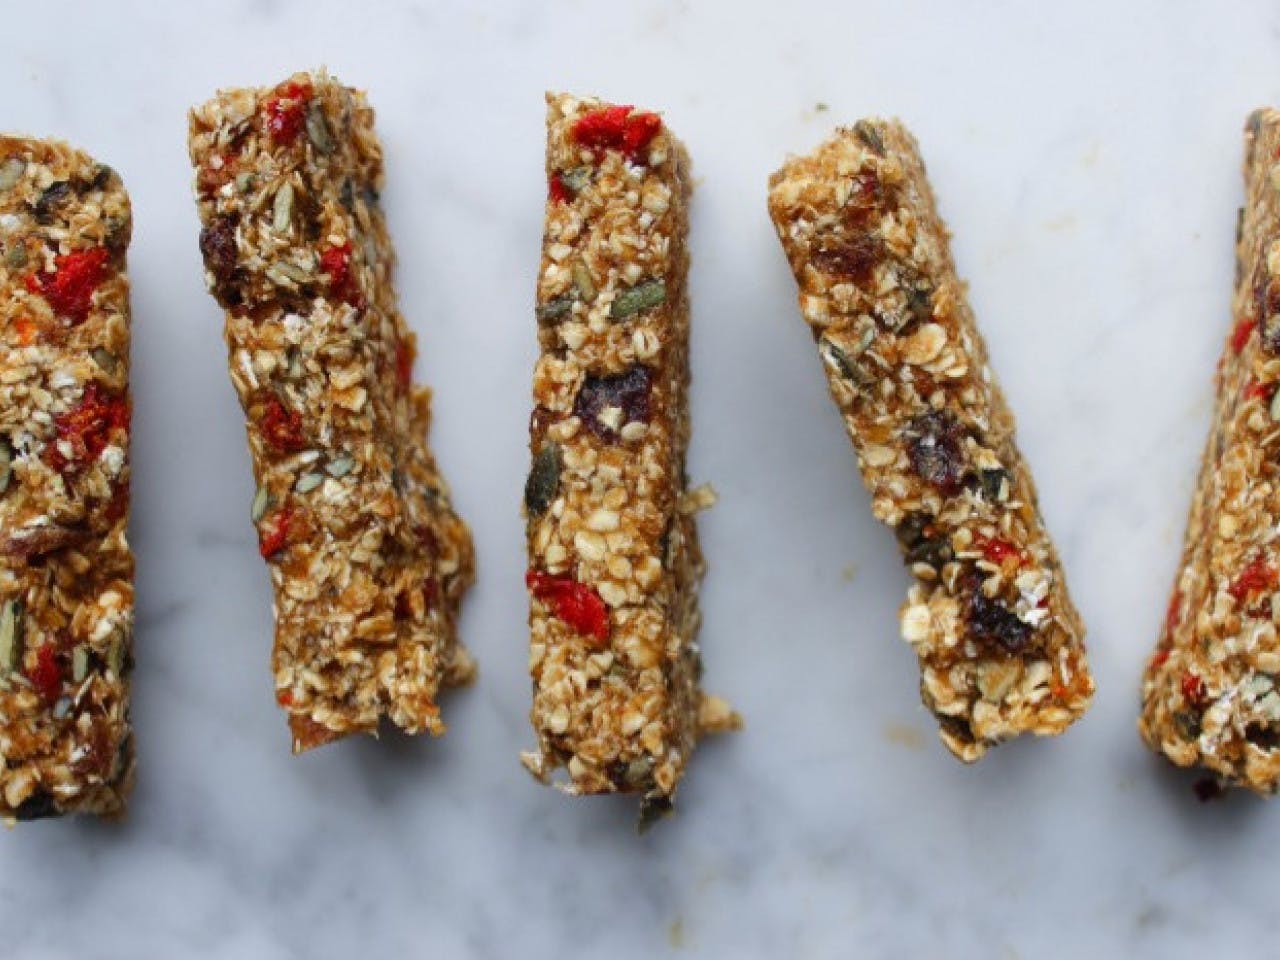 Muesli bars with grains and seeds